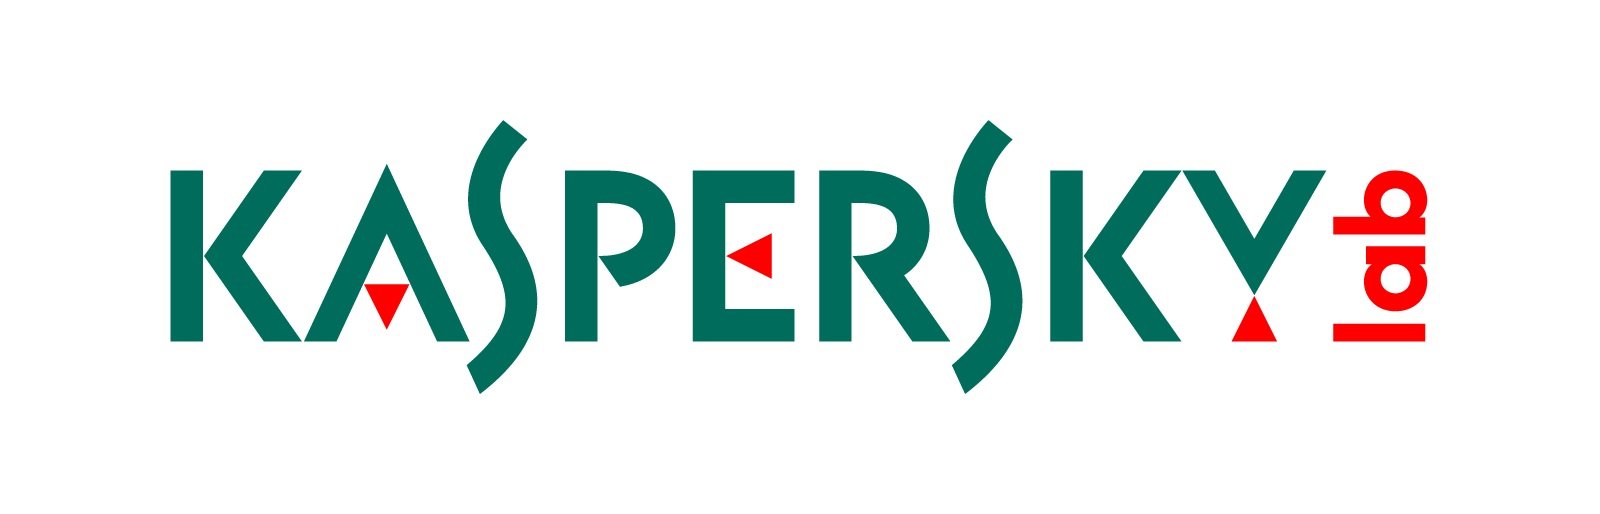 логотип Лаборатория Касперского